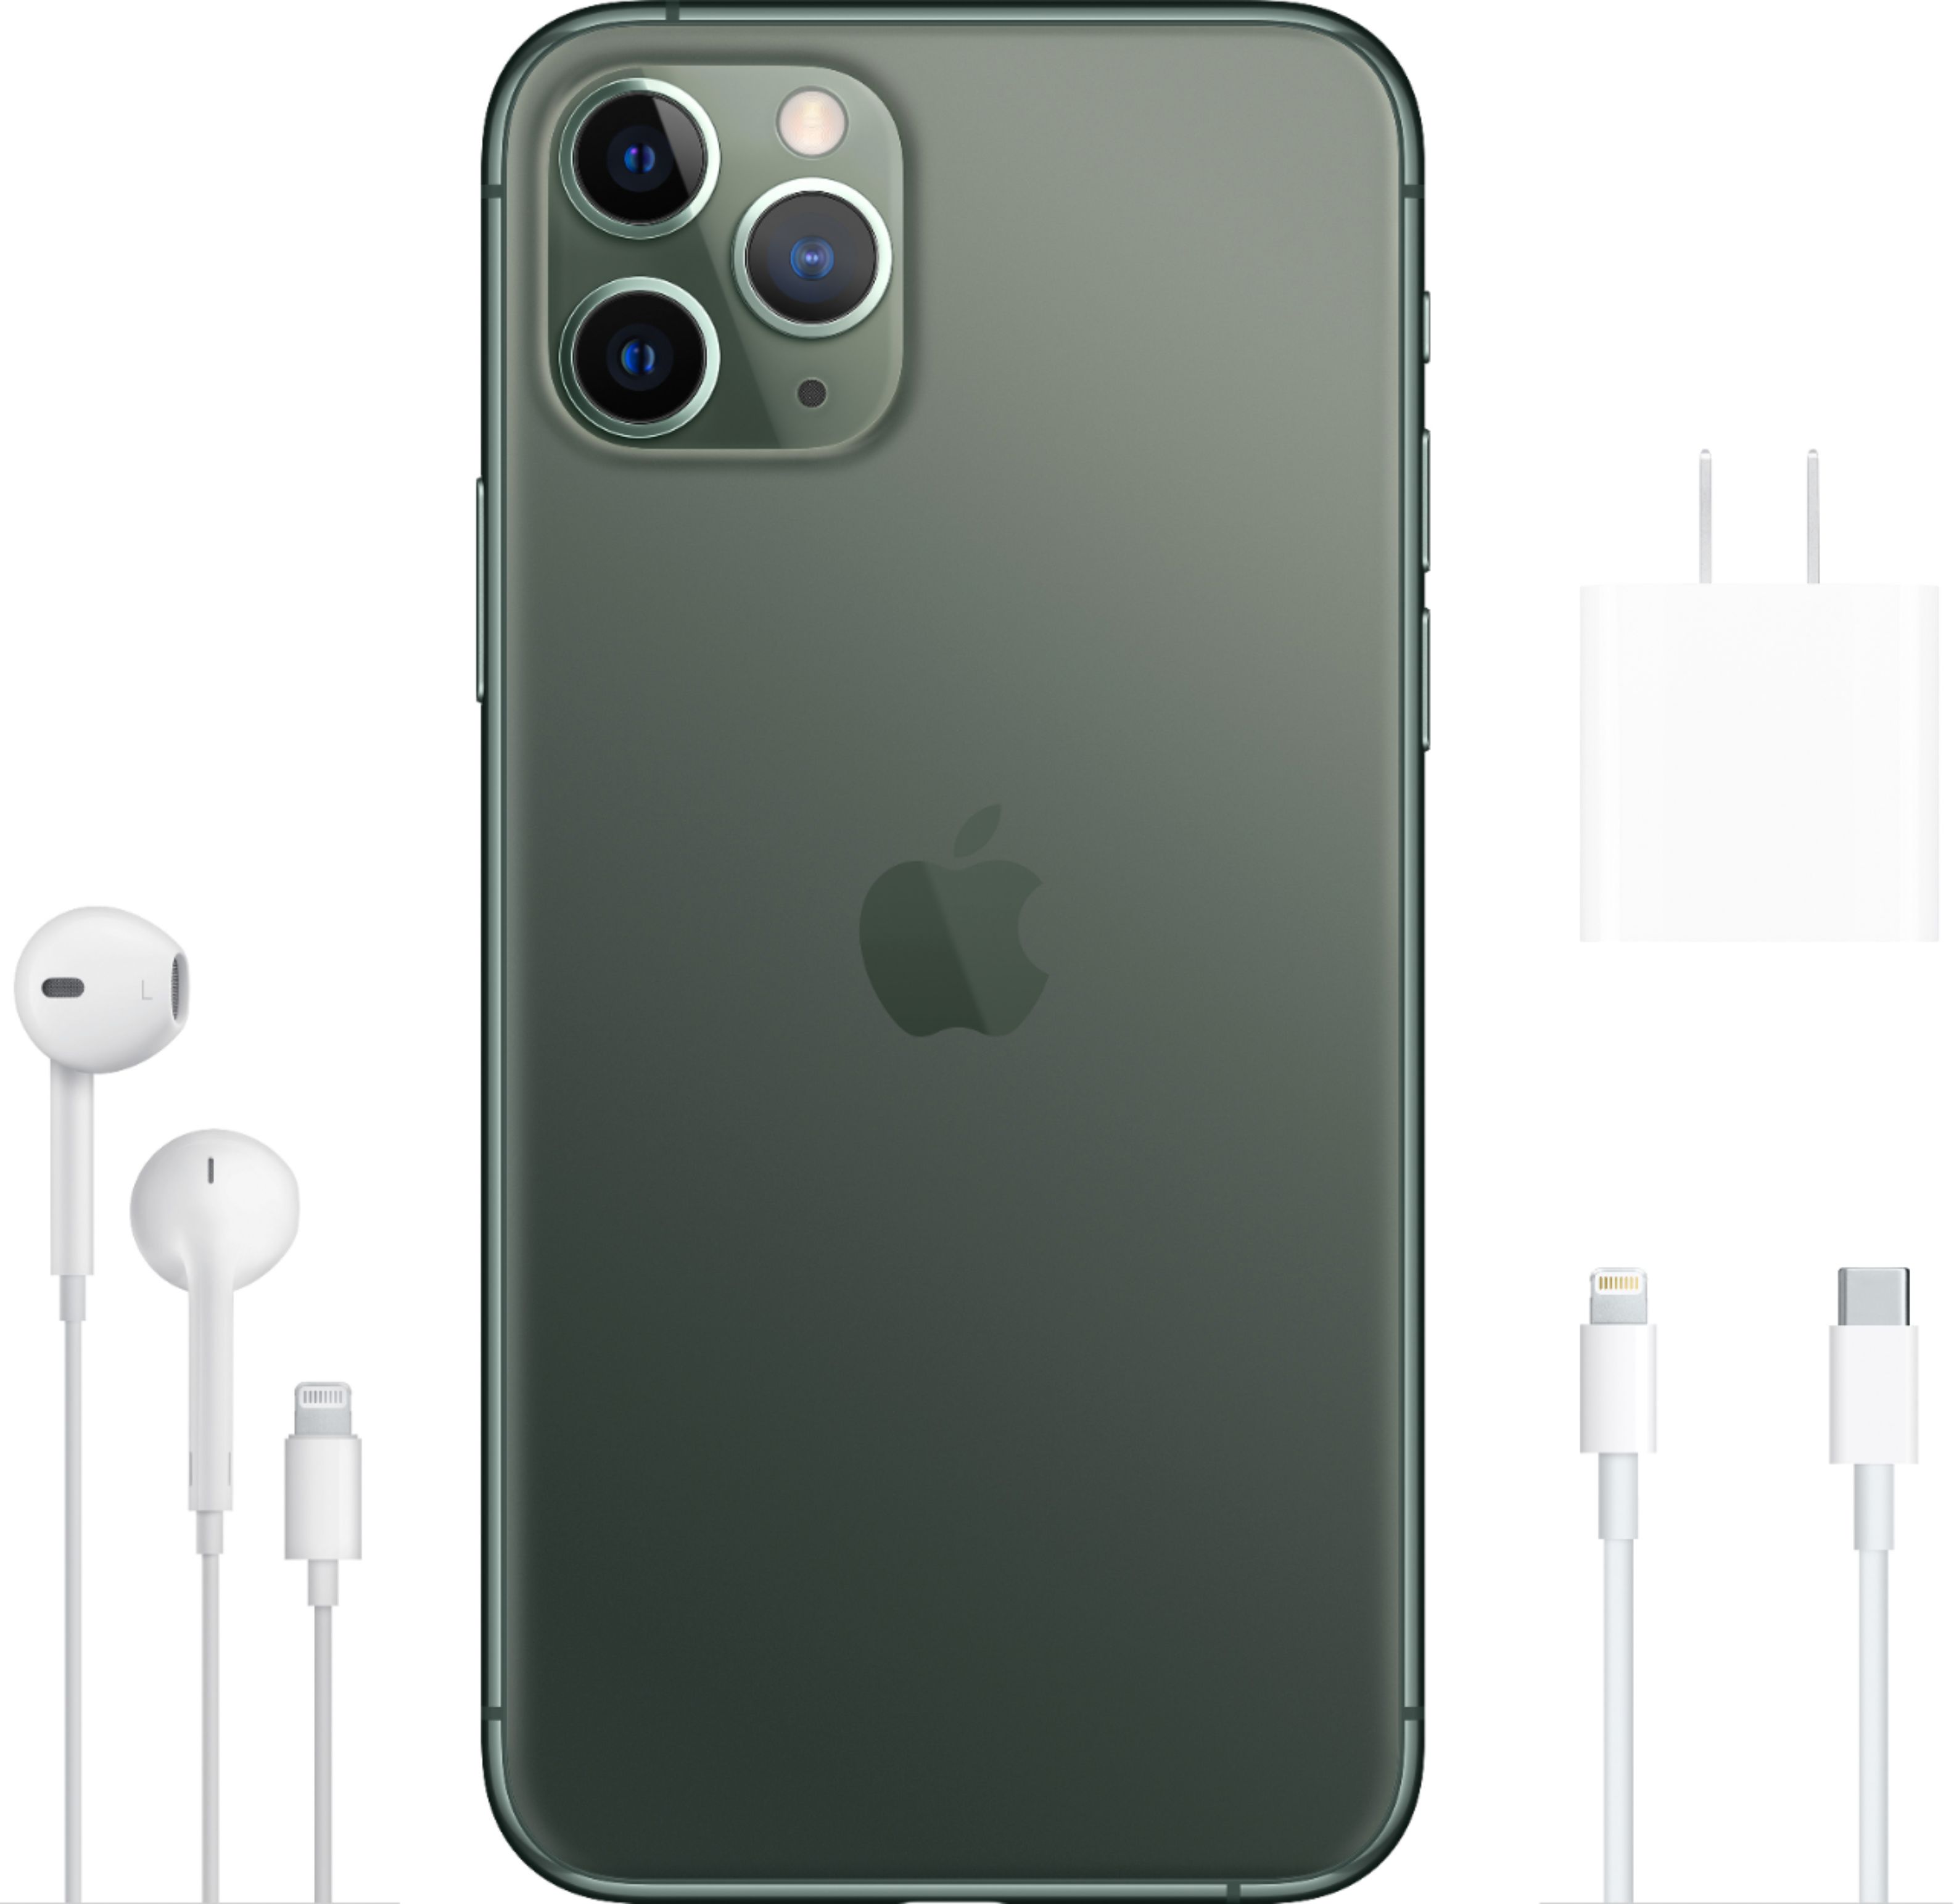 Apple Iphone 11 Pro 64gb Midnight Green Verizon Mwcl2ll A Best Buy